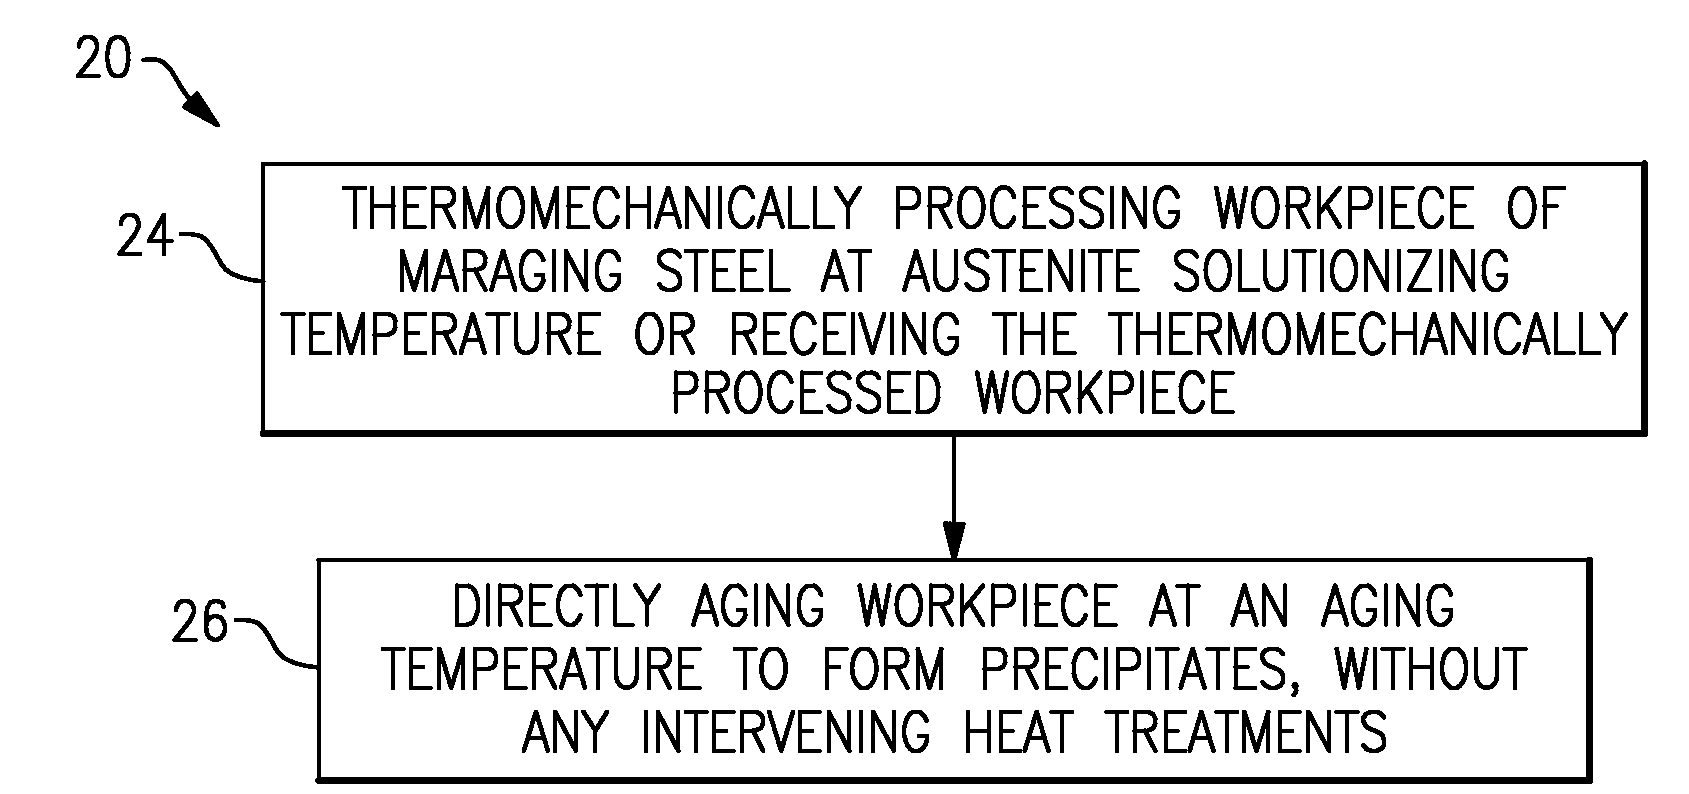 Method of processing maraging steel